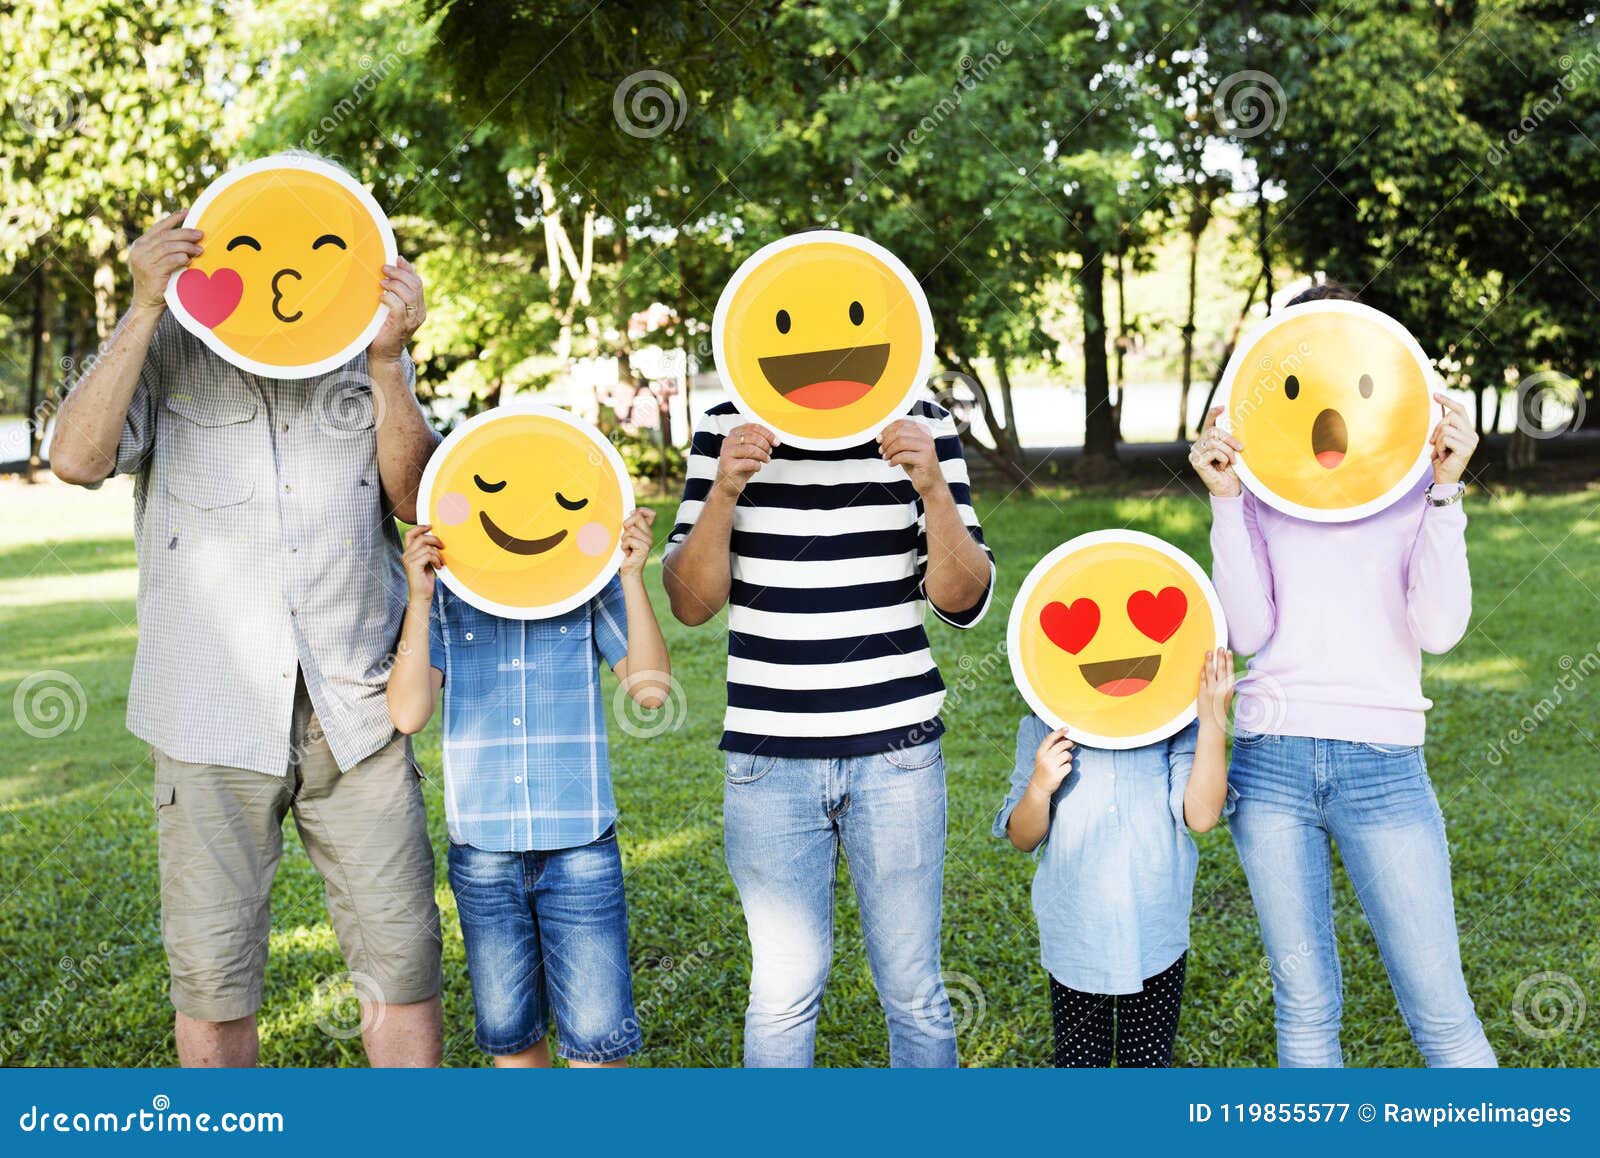 happy family holding up emojis